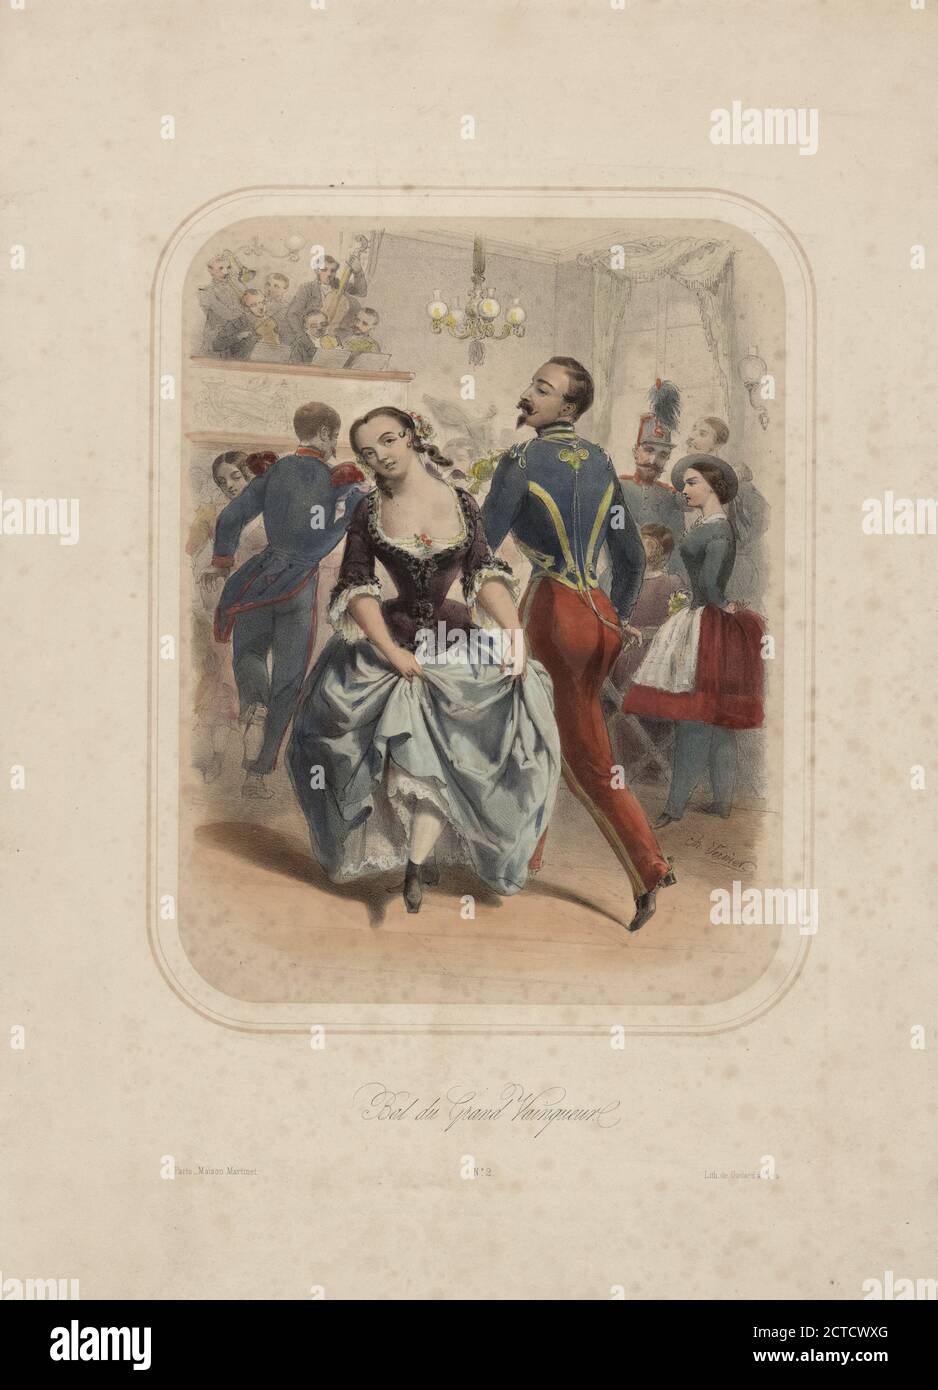 Bal du grand vainqueur, still image, Prints, 1860 - 1869, Vernier, Charles, 1831-1887 Stock Photo